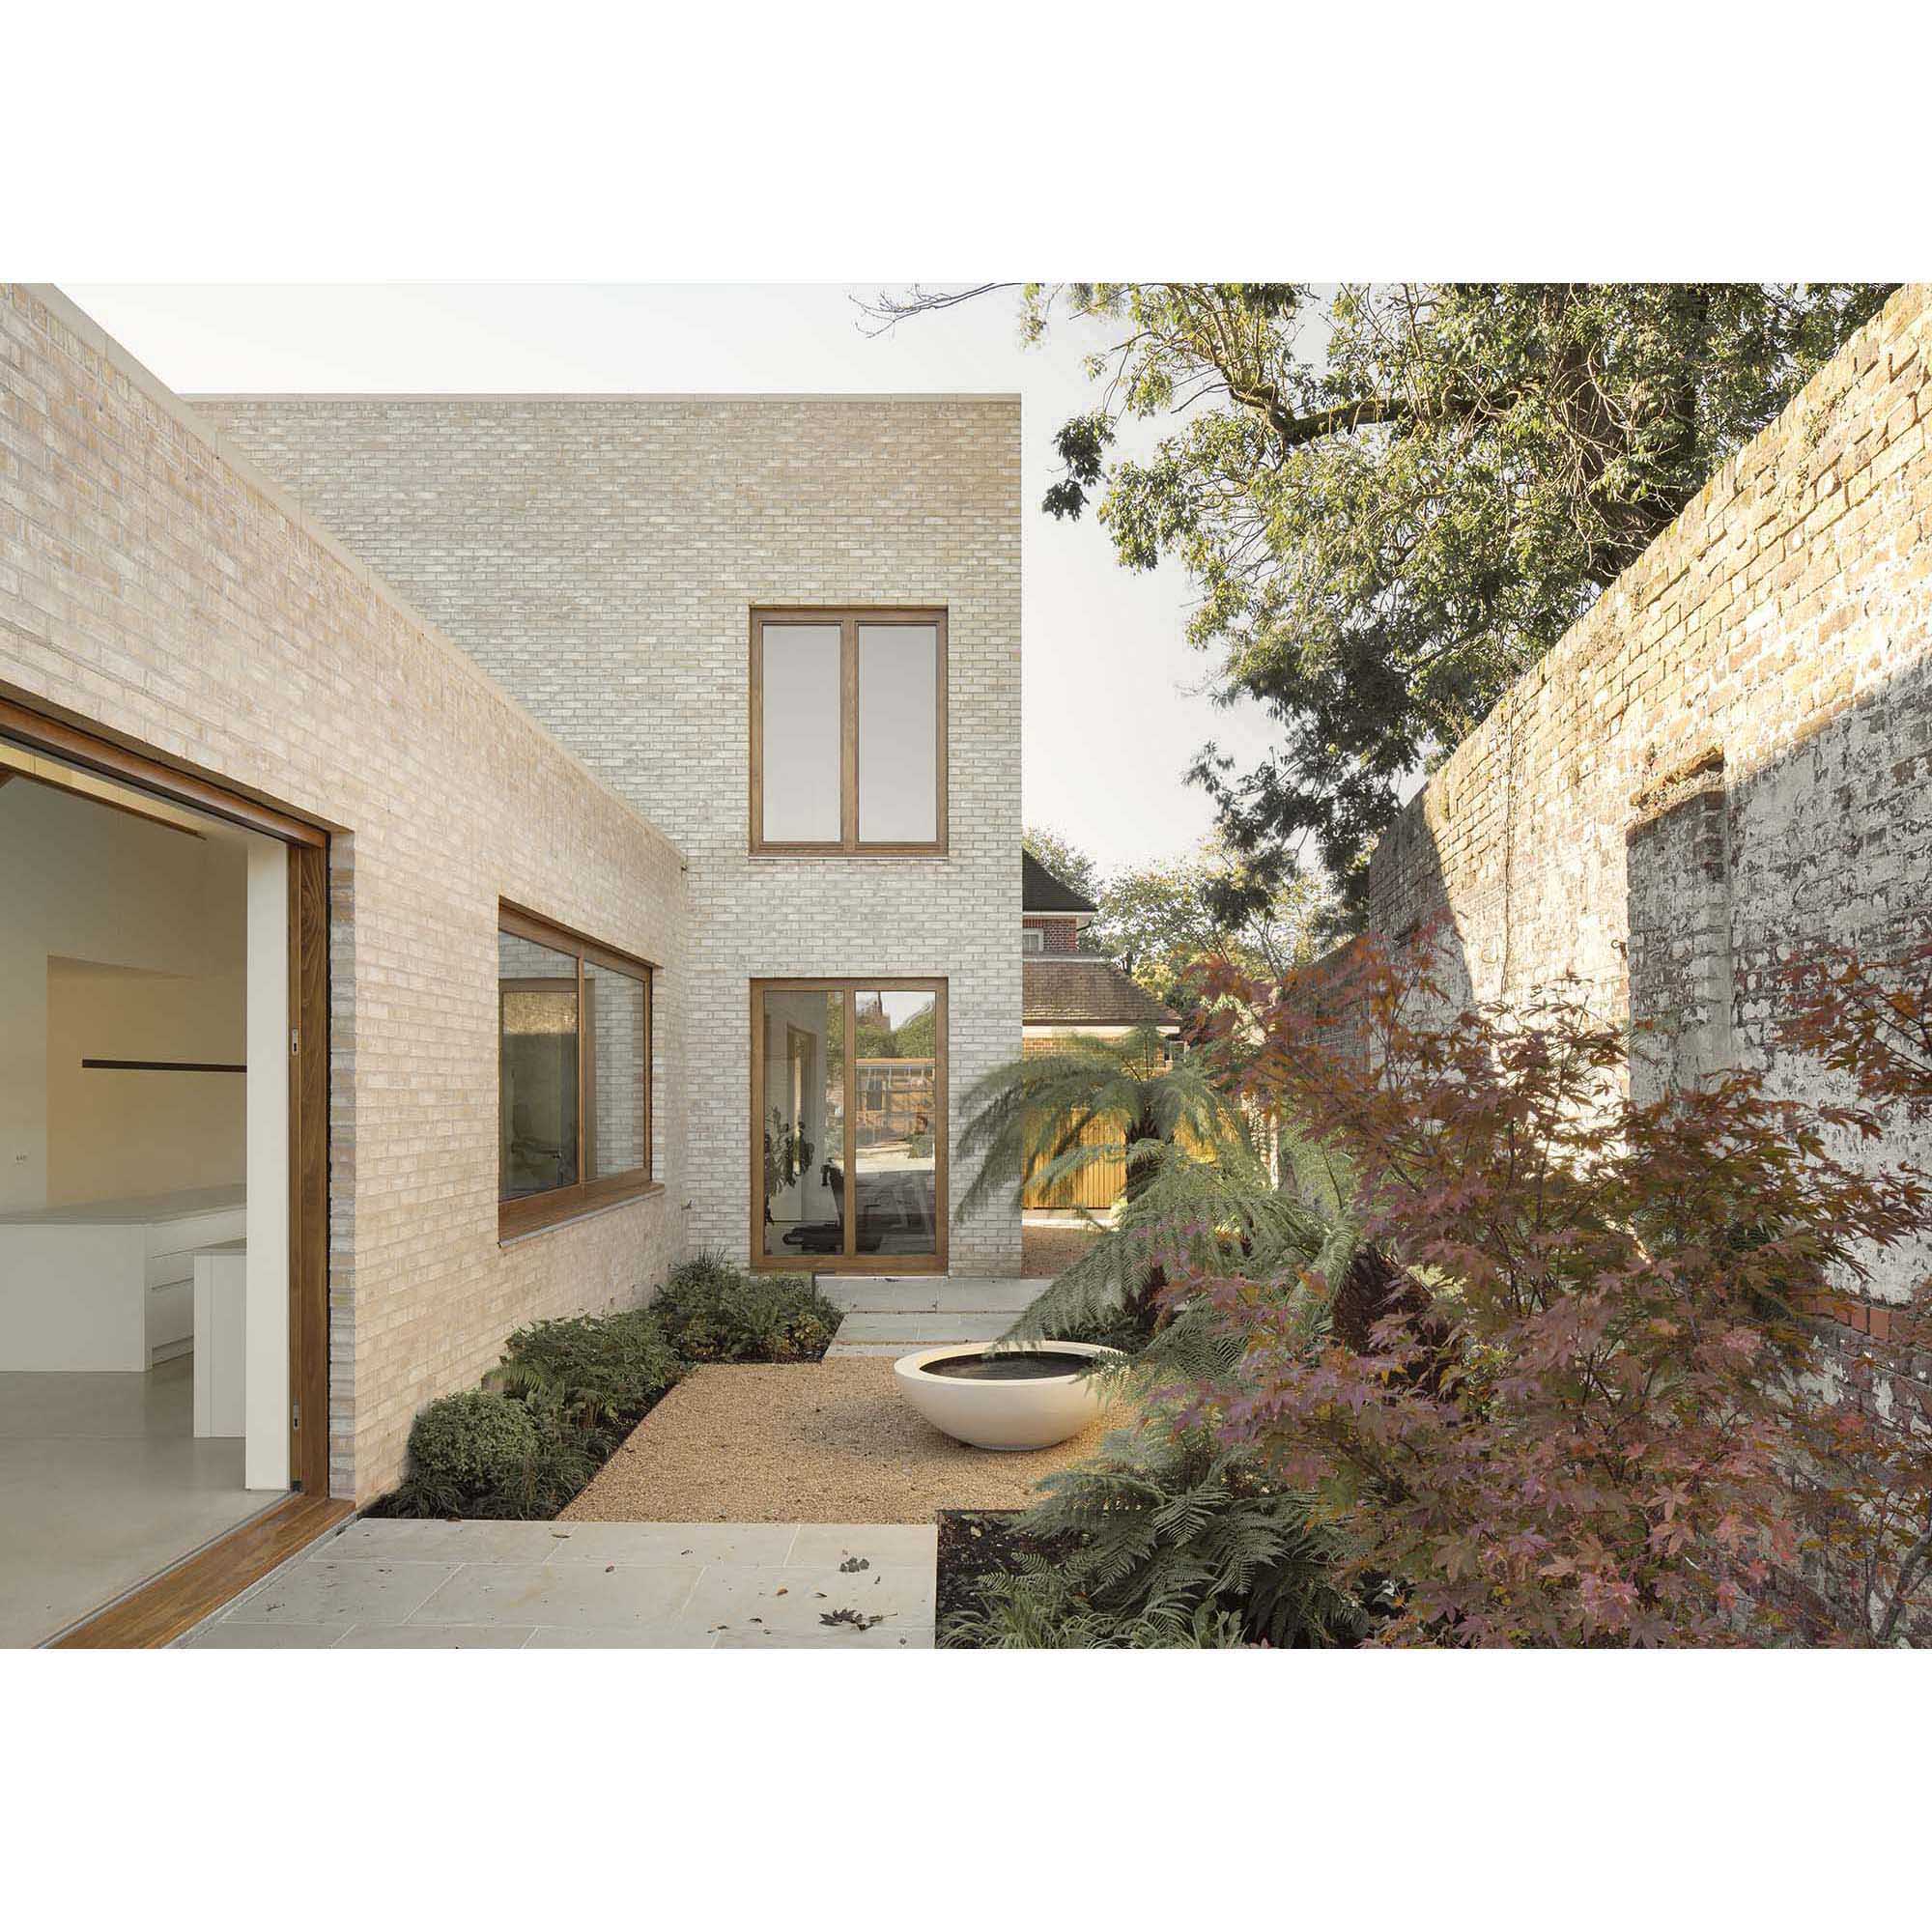 Erbar Mattes Architects Wimbledon custom new build timber frame house garden side view